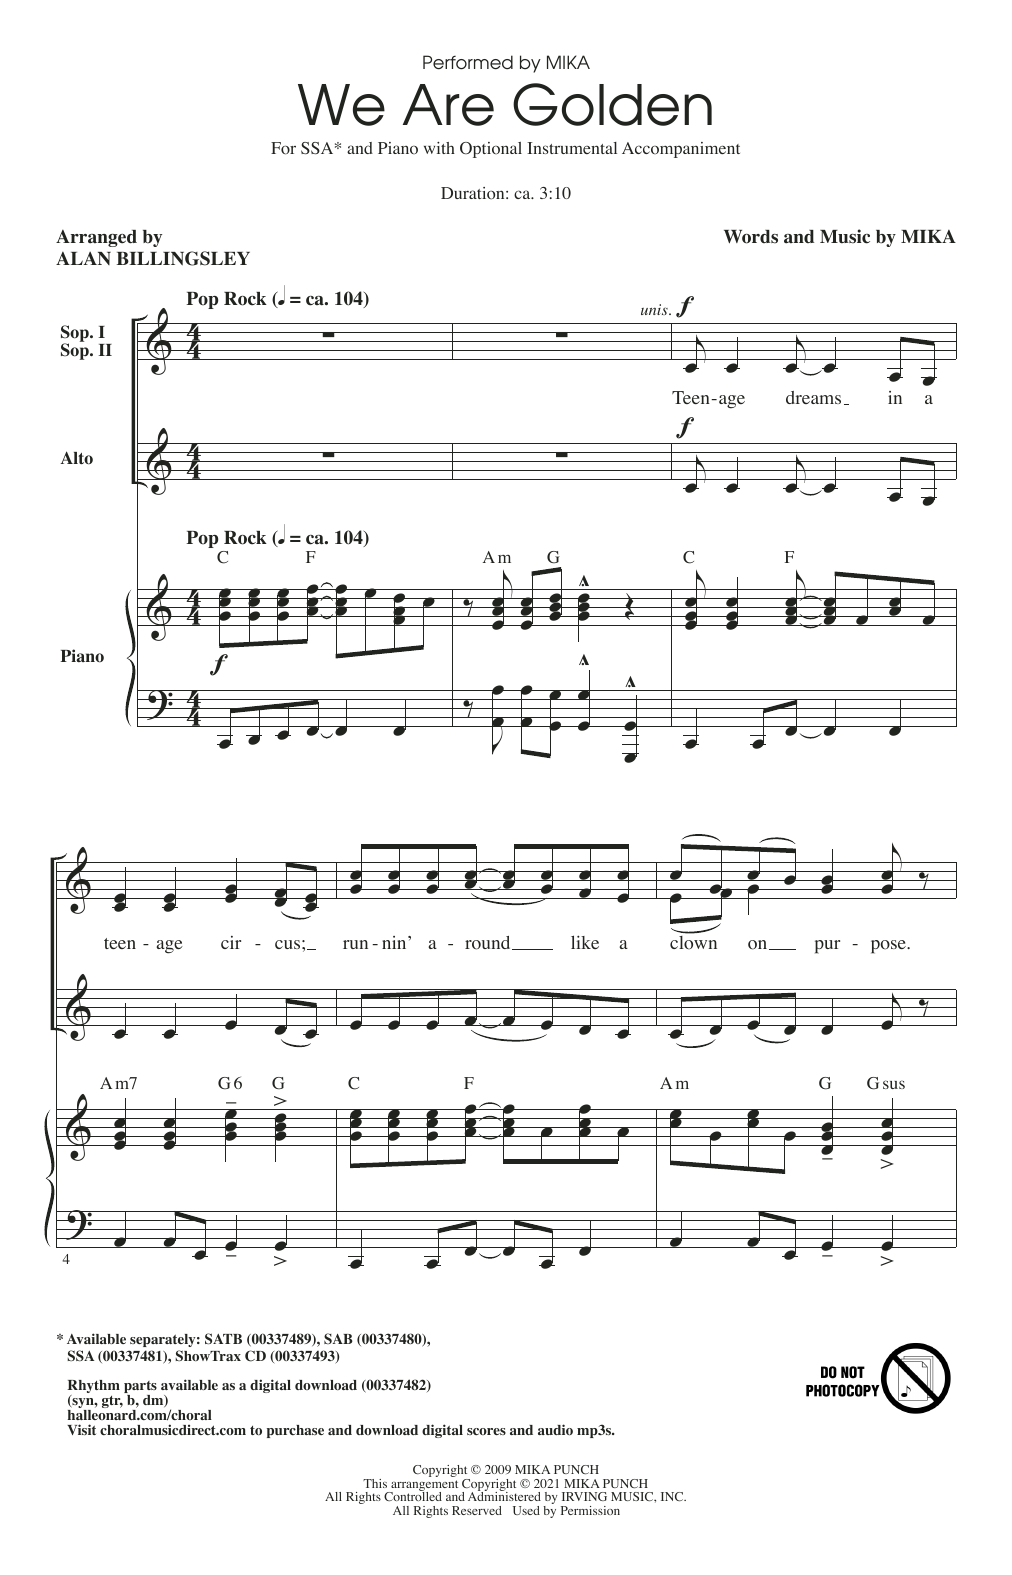 Mika We Are Golden (arr. Alan Billingsley) Sheet Music Notes & Chords for SSA Choir - Download or Print PDF